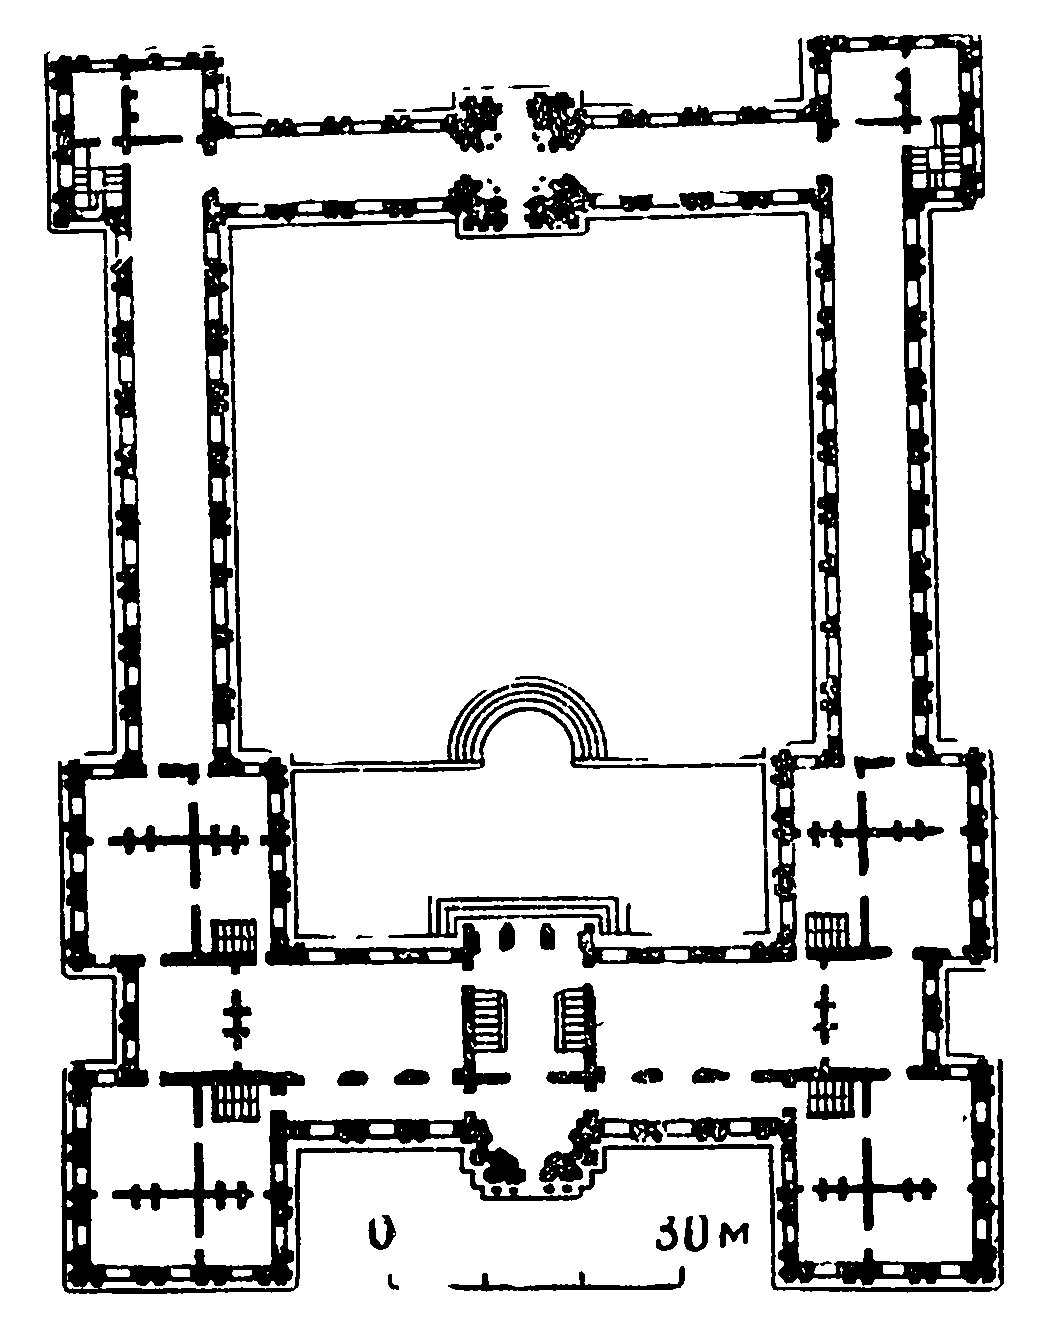 6. Париж. Люксембургский дворец, 1611 г., С. де Бросс. План и фасад